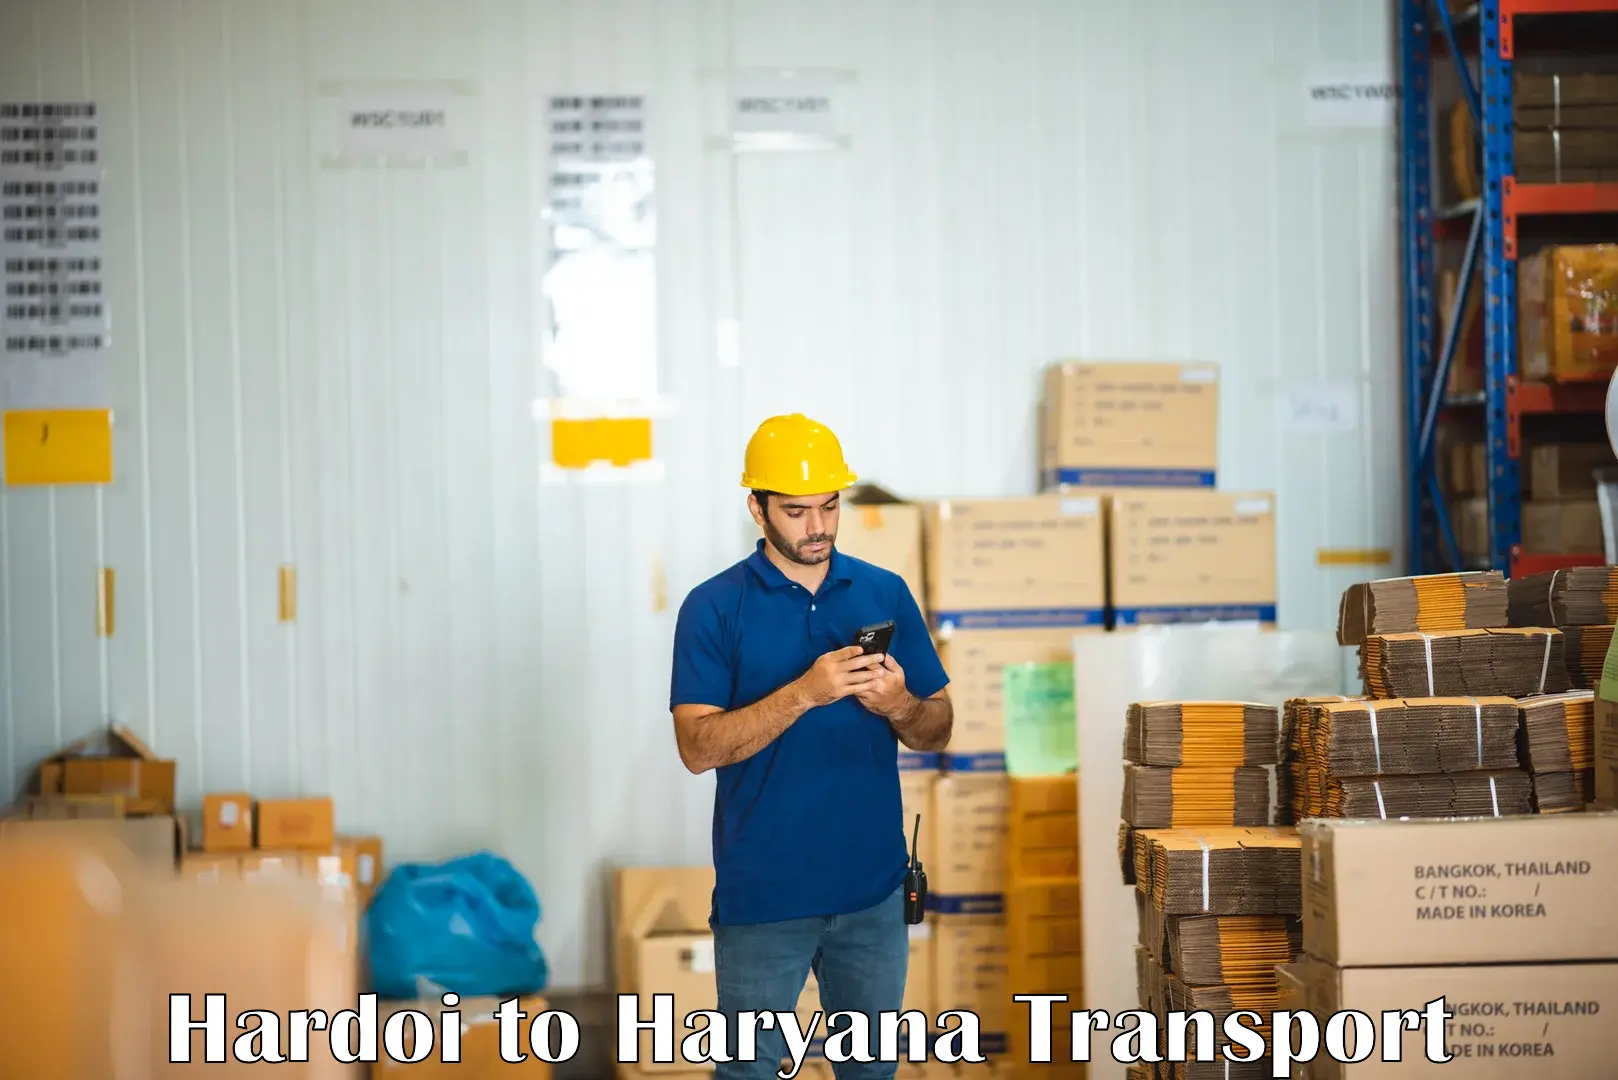 Shipping partner Hardoi to Hansi